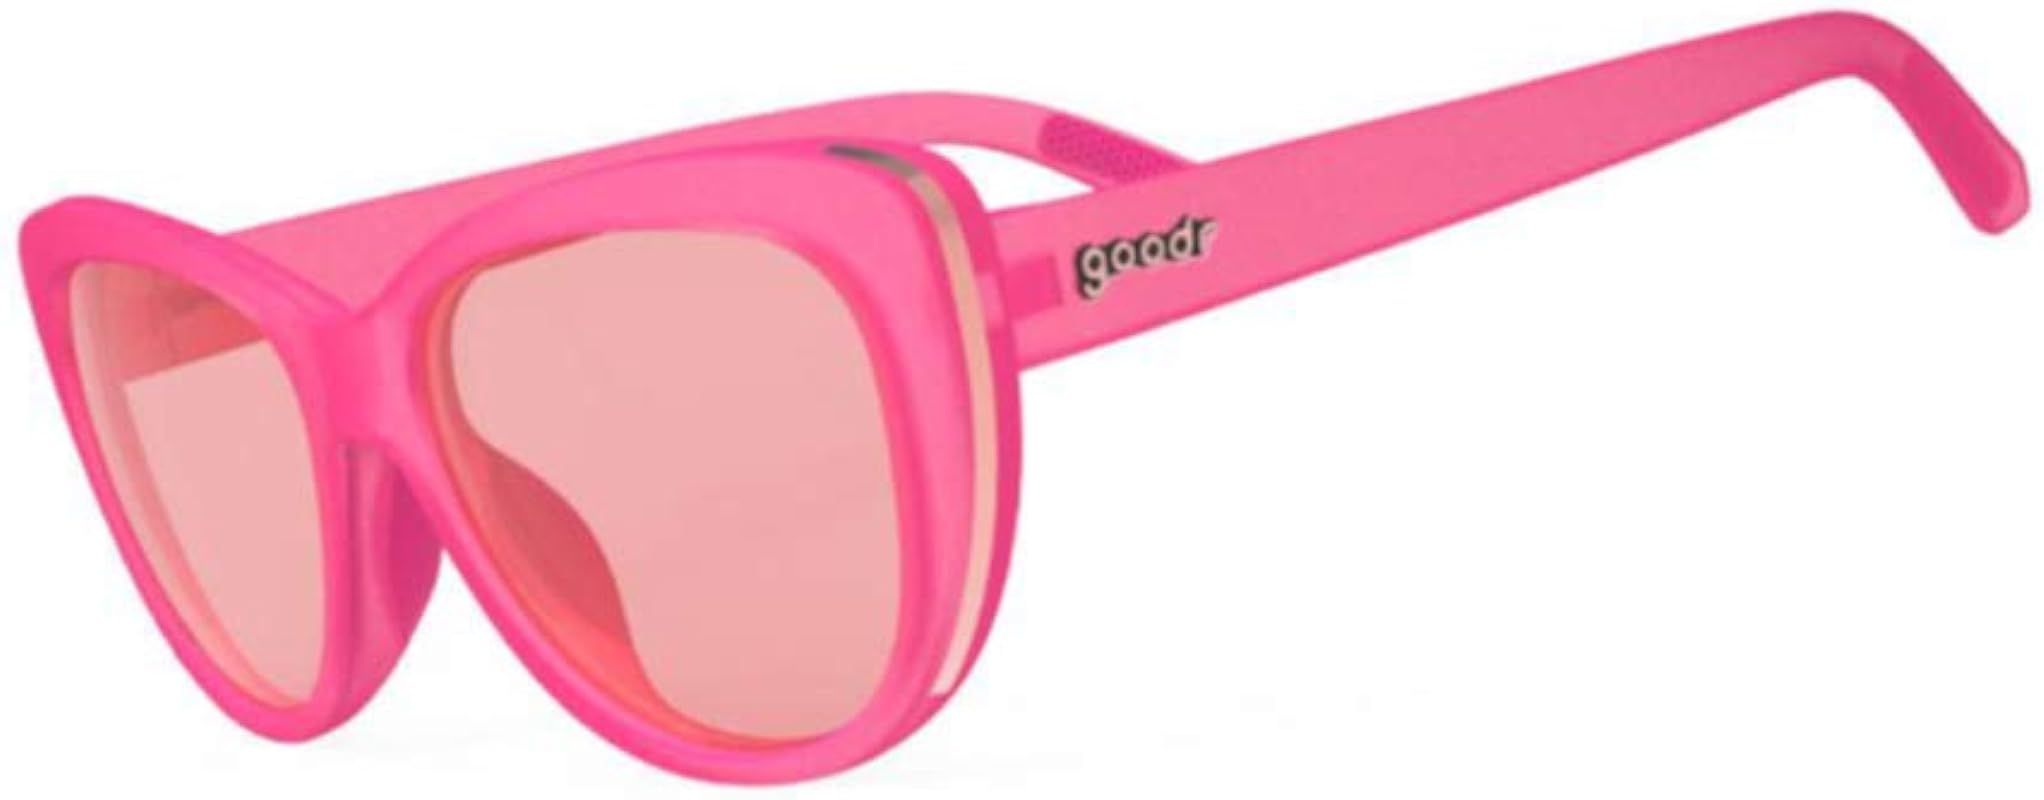 Goodr Sand Trap Queen Sunglasses | Amazon (US)